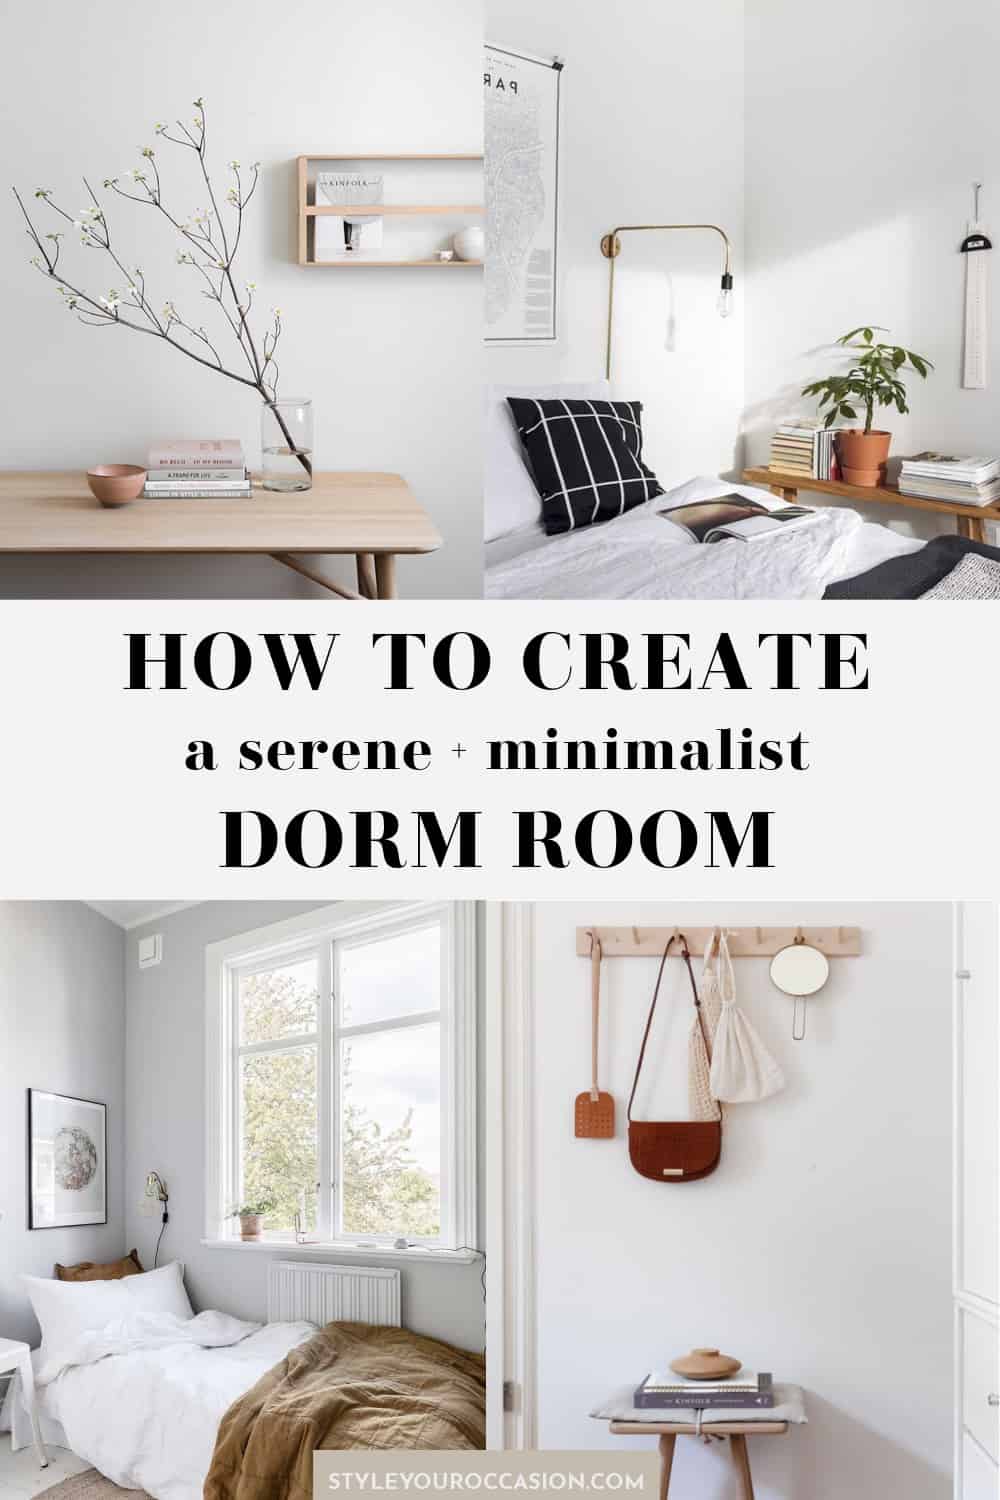 Minimalist Dorm Room Ideas + How To Make Your Dorm *Totally* Serene!